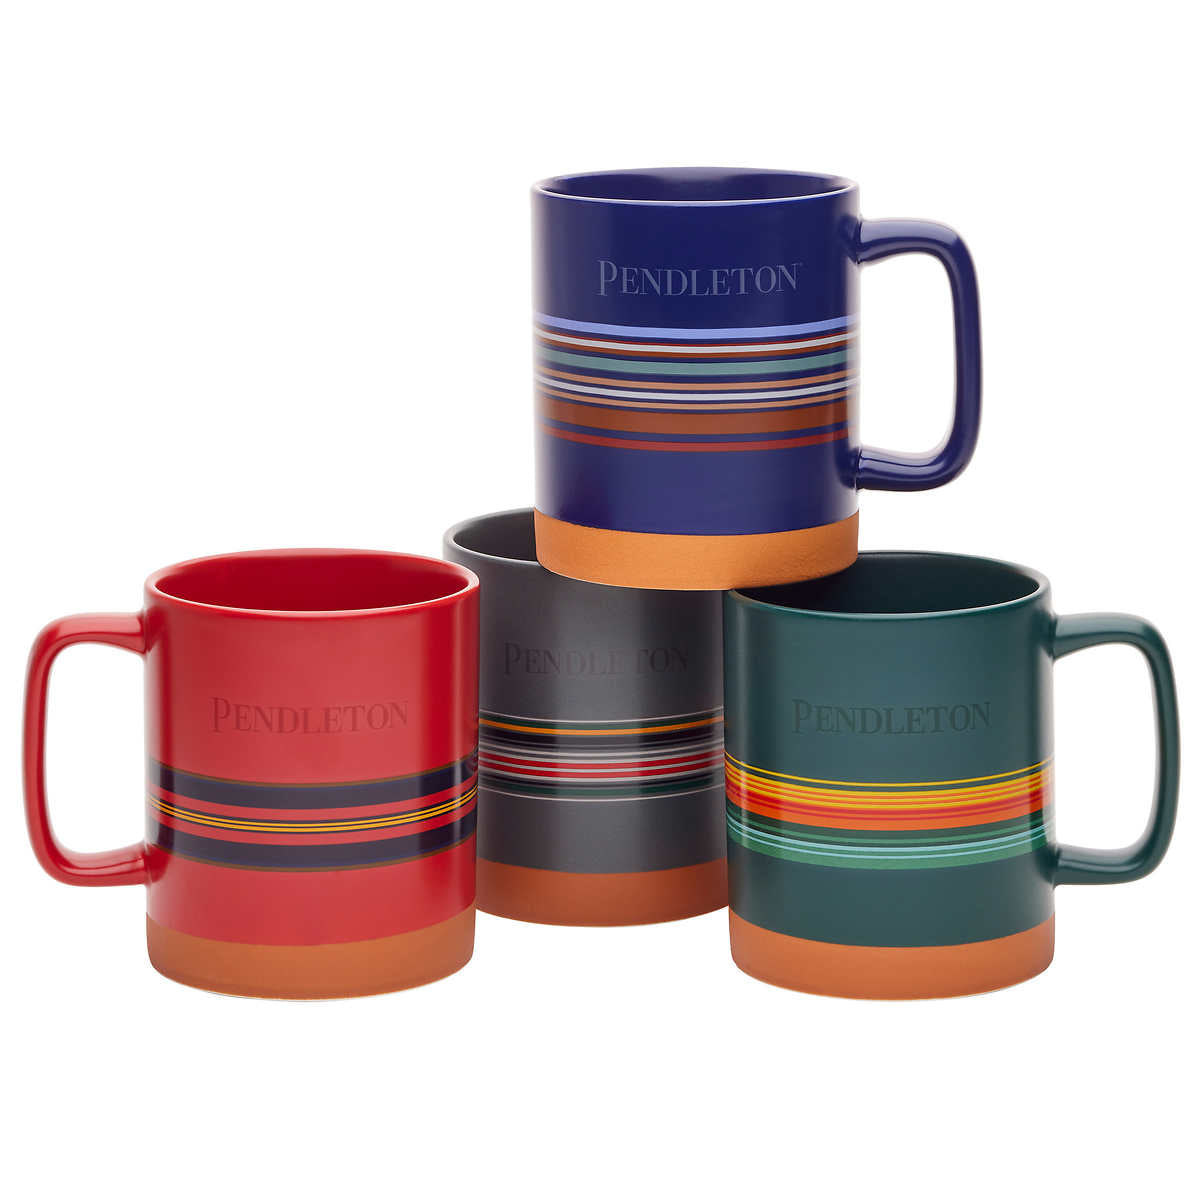 Pendleton-ensemble-4-tasses-collectionner-collectible-mug-set-national-park-collection-4